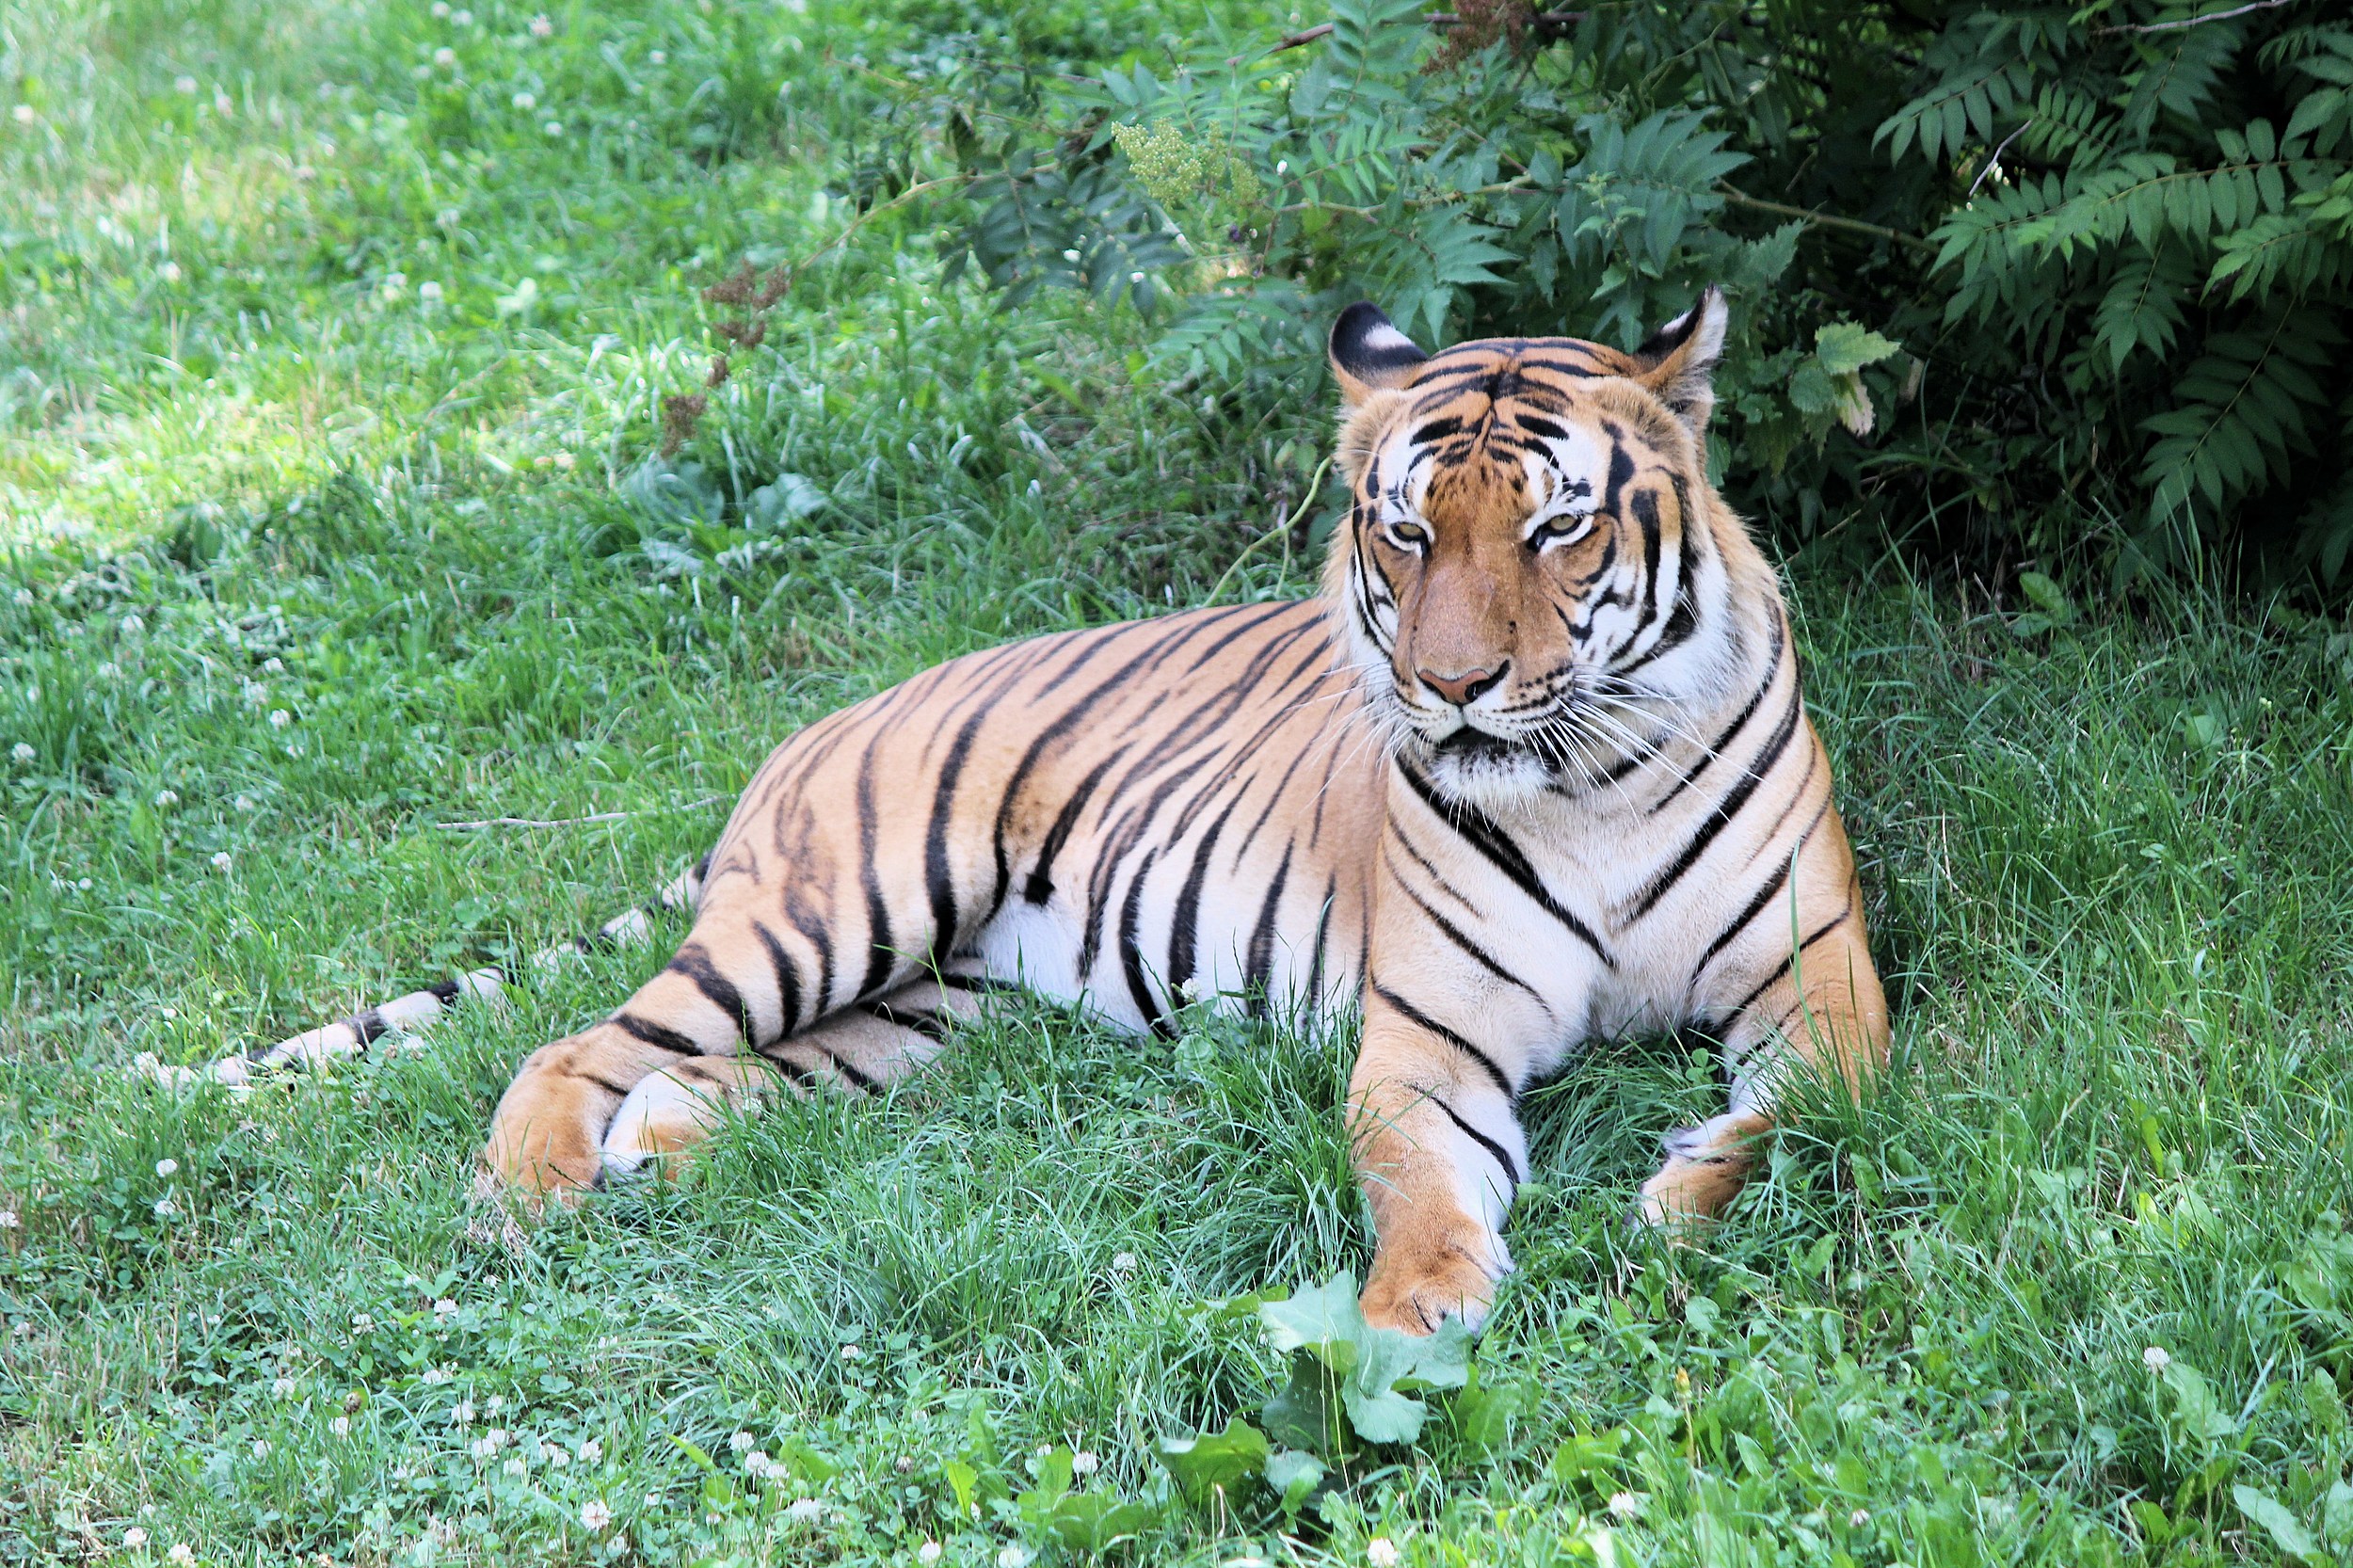 Toledo Zoo welcomes tiger cubs, baby giraffes